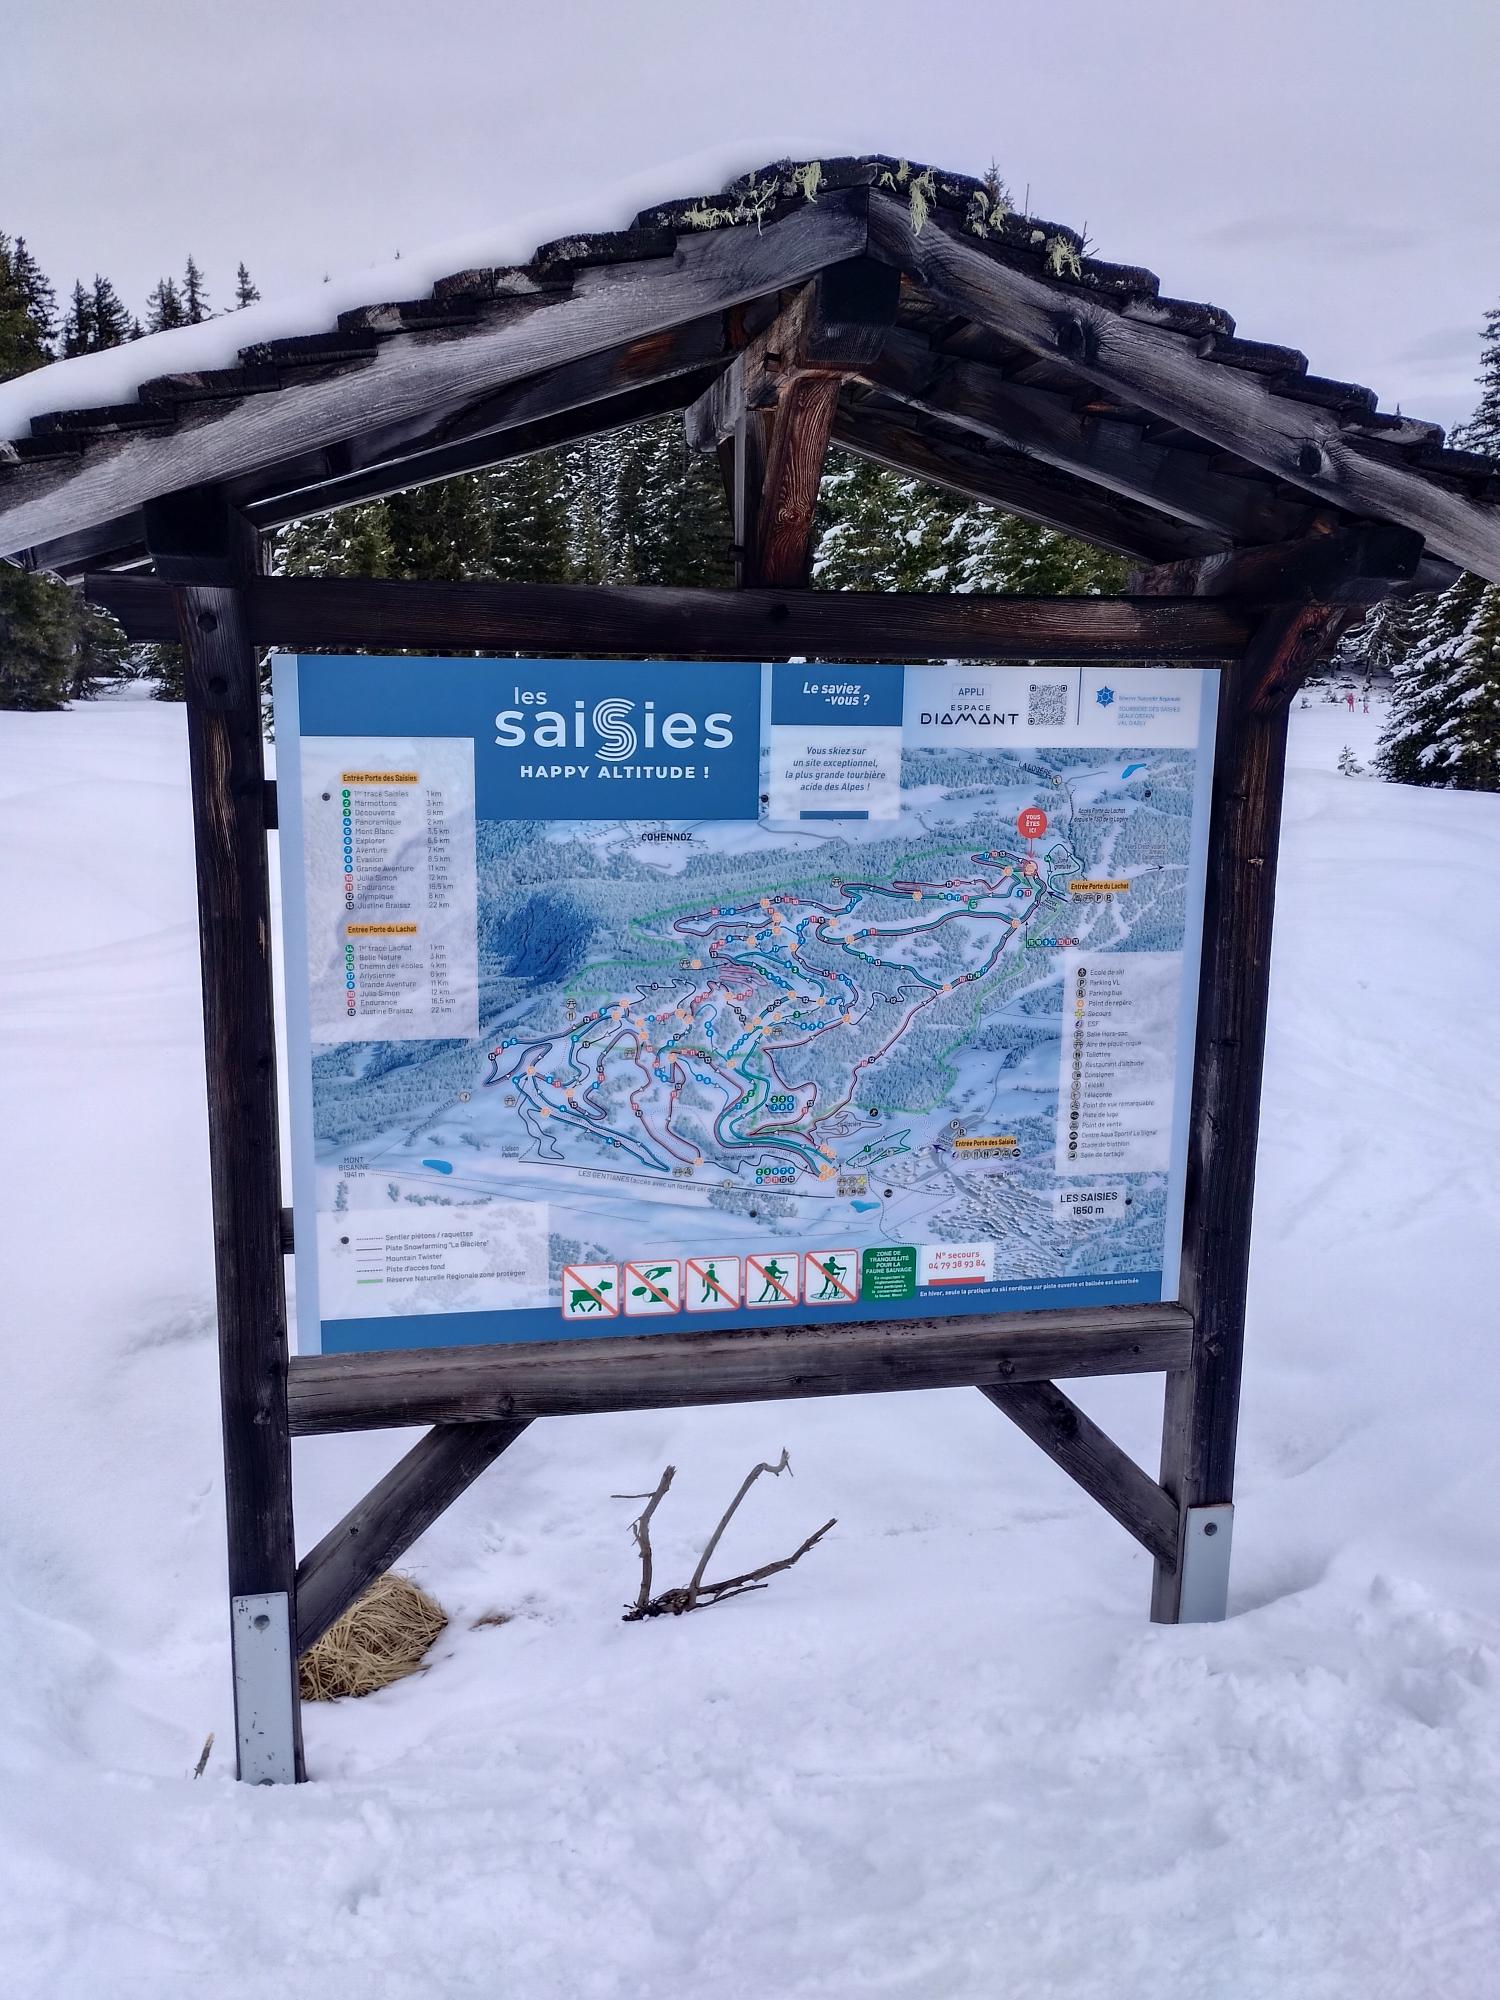 Les Saisies, Savoie